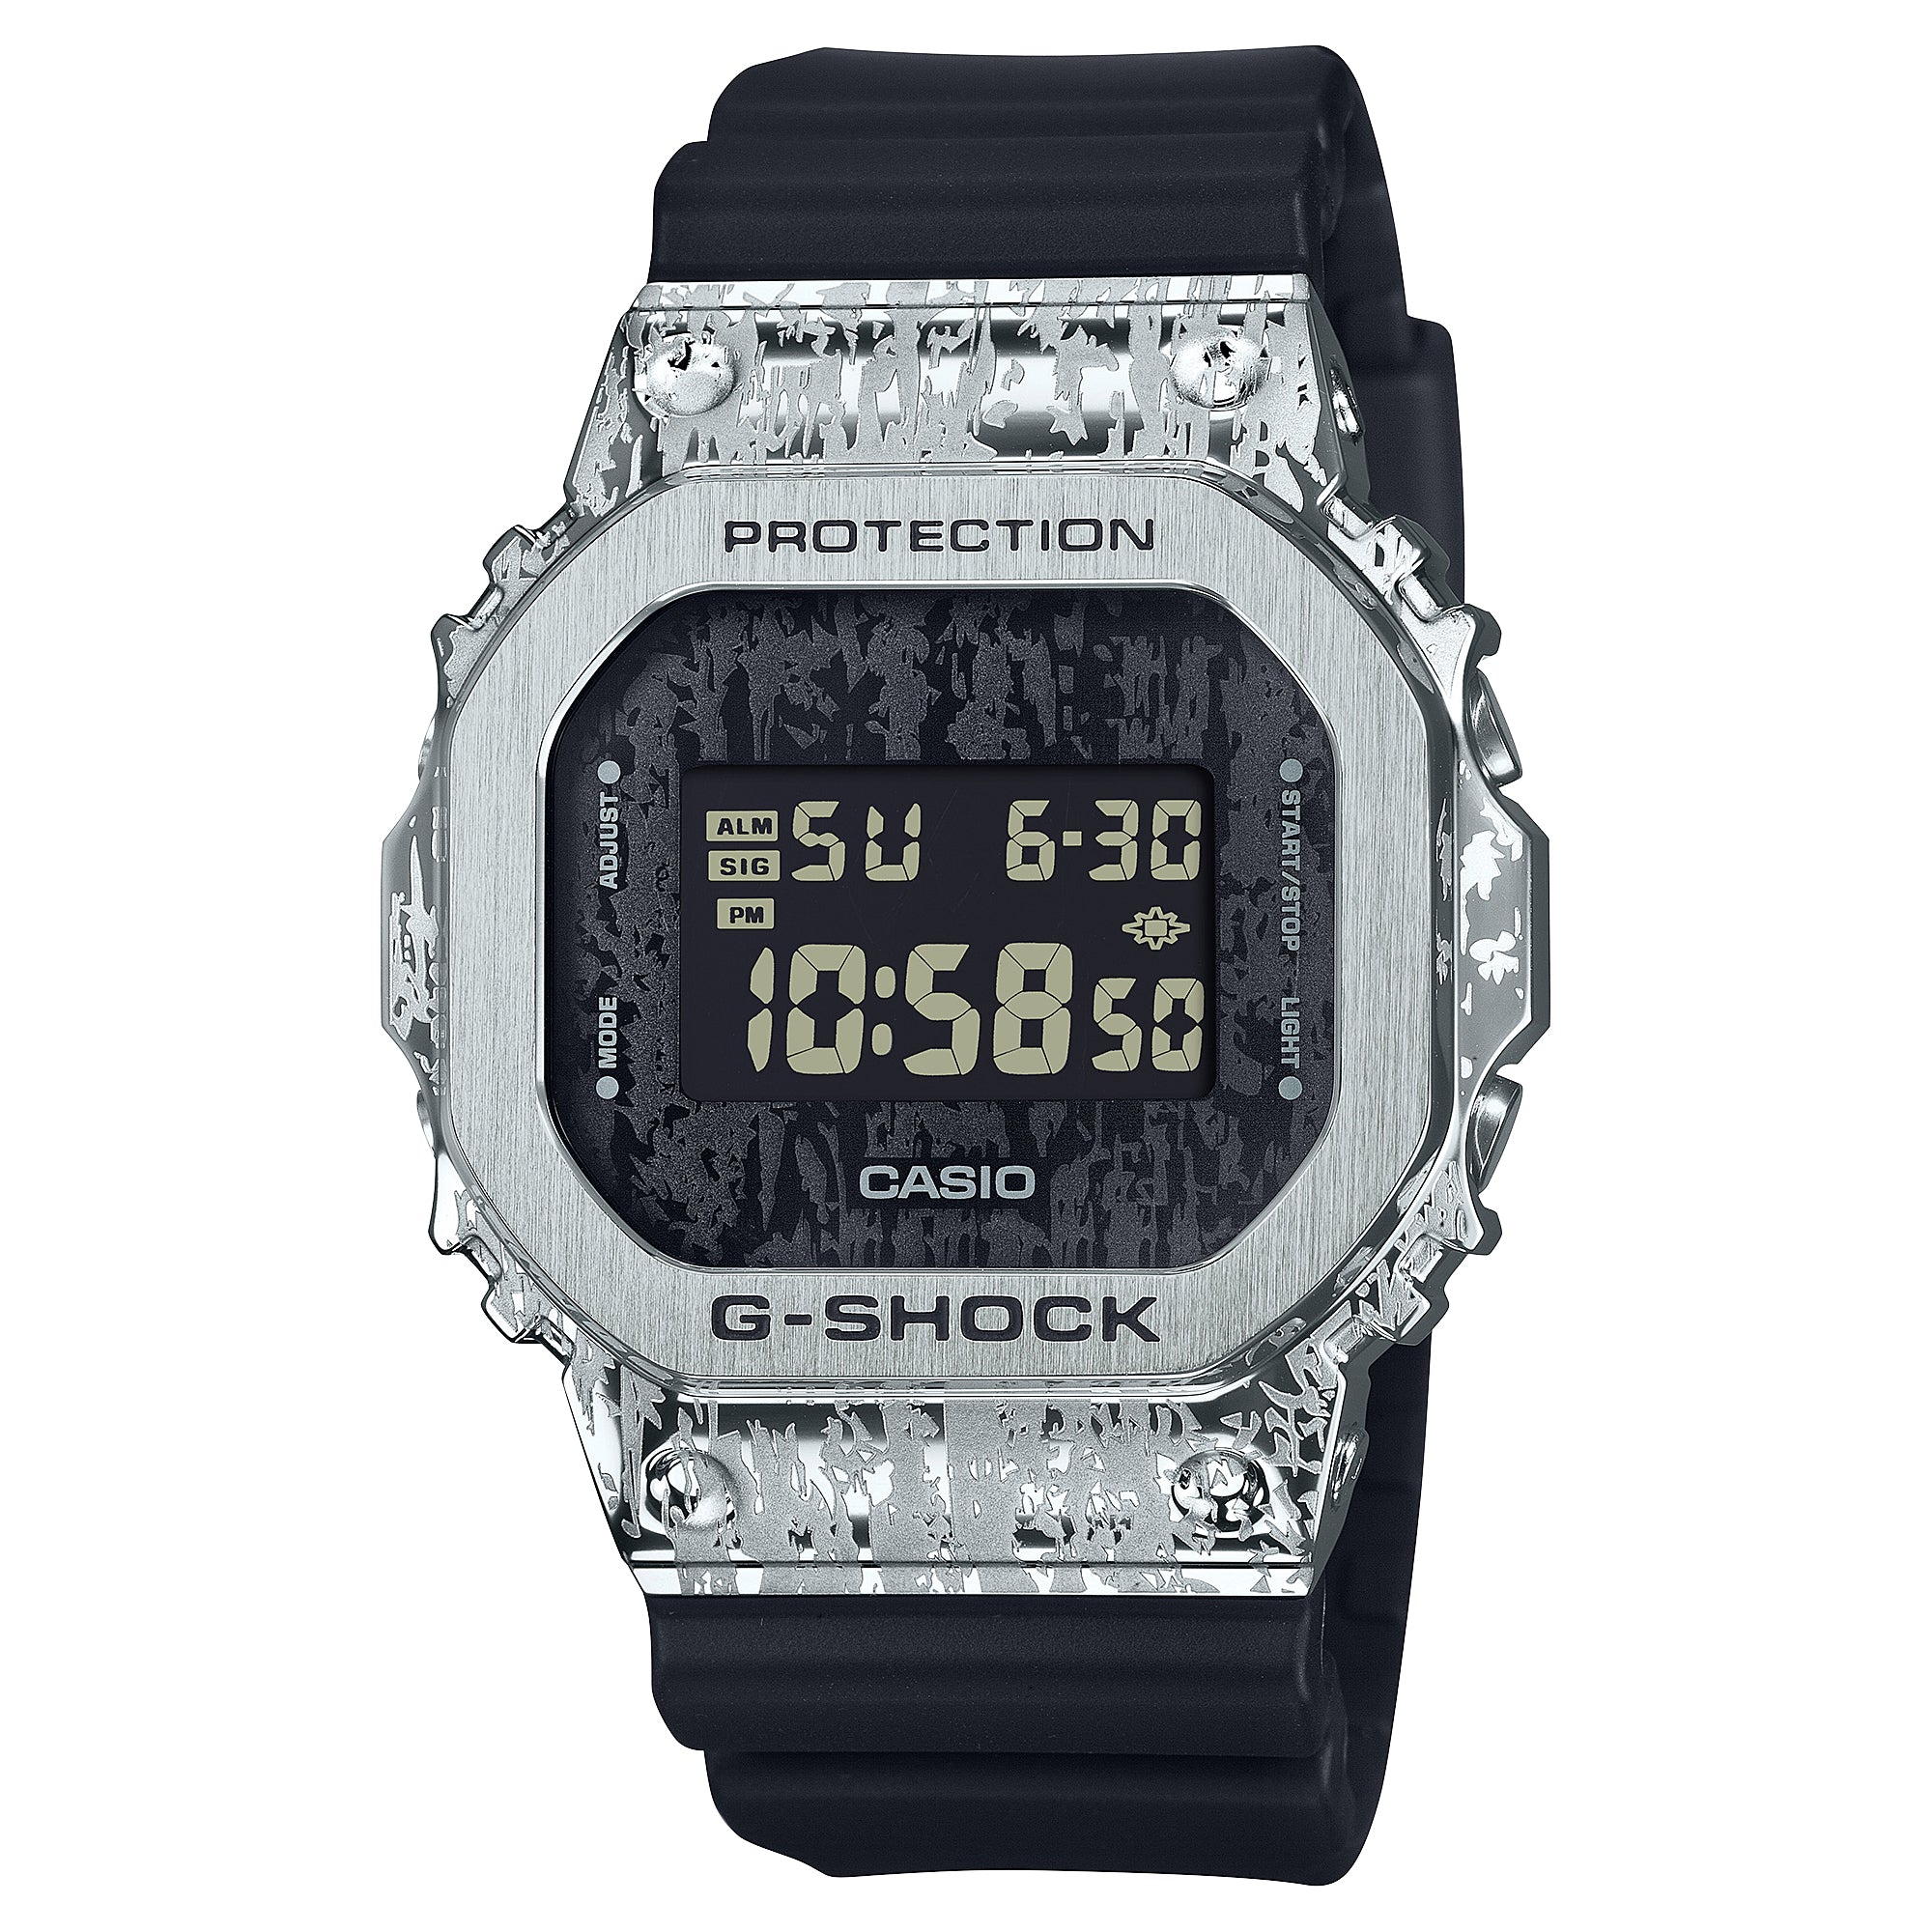 Casio G-Shock GM-5600 Lineup Grunge Camouflage Series Band Watch GM5600GC-1D GM-5600GC-1D GM-5600GC-1